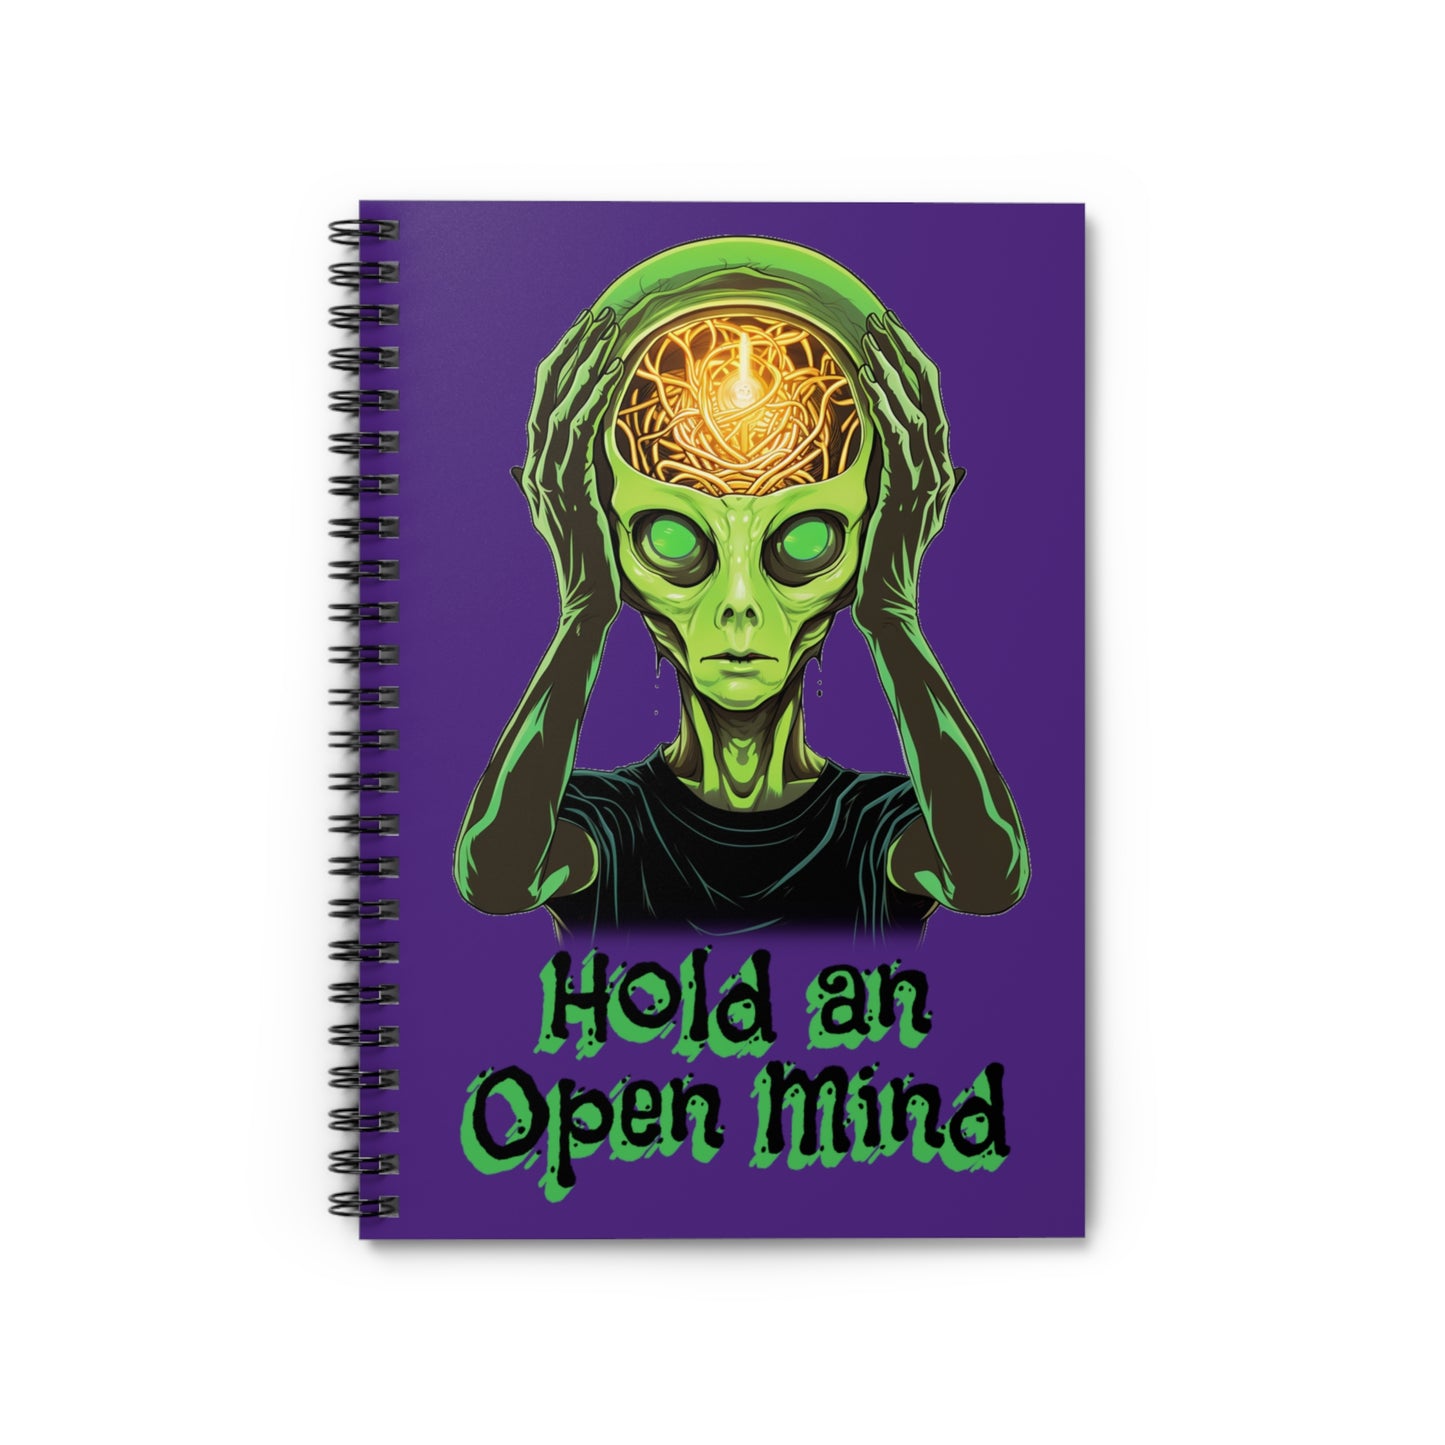 Open Mind | Spiral Notebook - Ruled Line